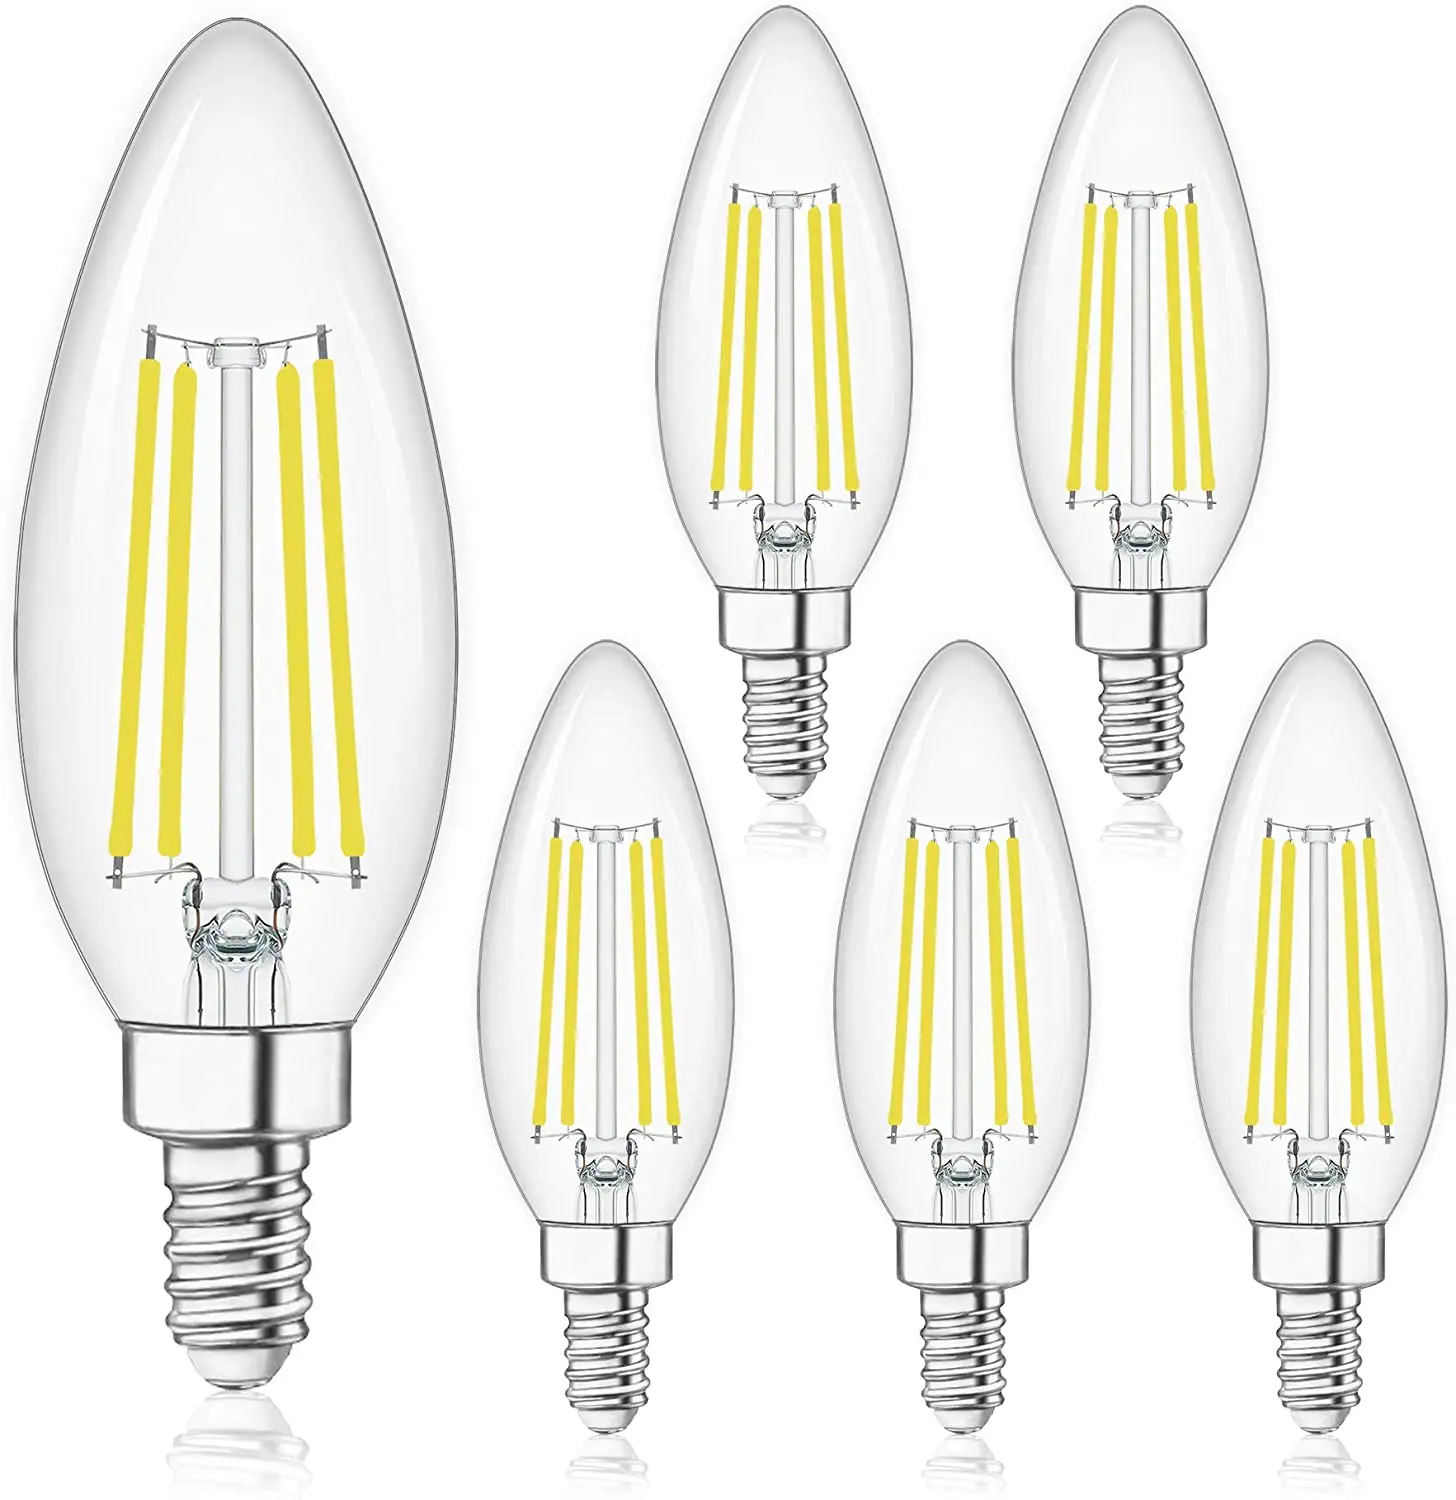 Bombillas LED regulables C35, 2W, 4W, 5W, E12, E14, B22, E26, E27, superventas